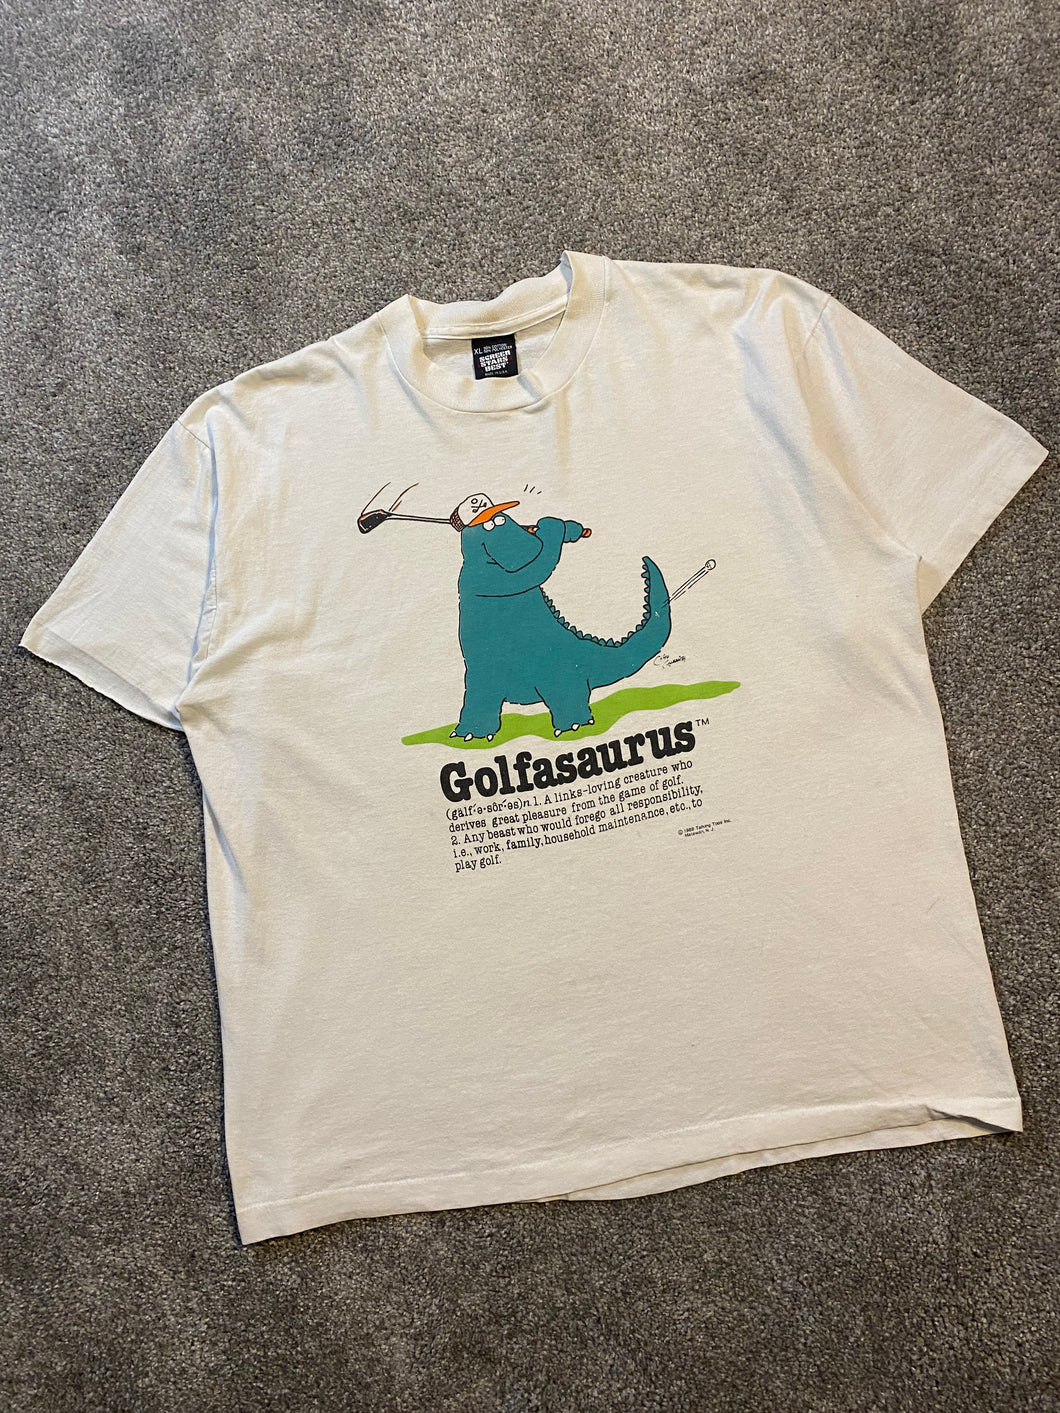 Vintage 1986 Golfasaurus Cartoon Art Tee Shirt - Large